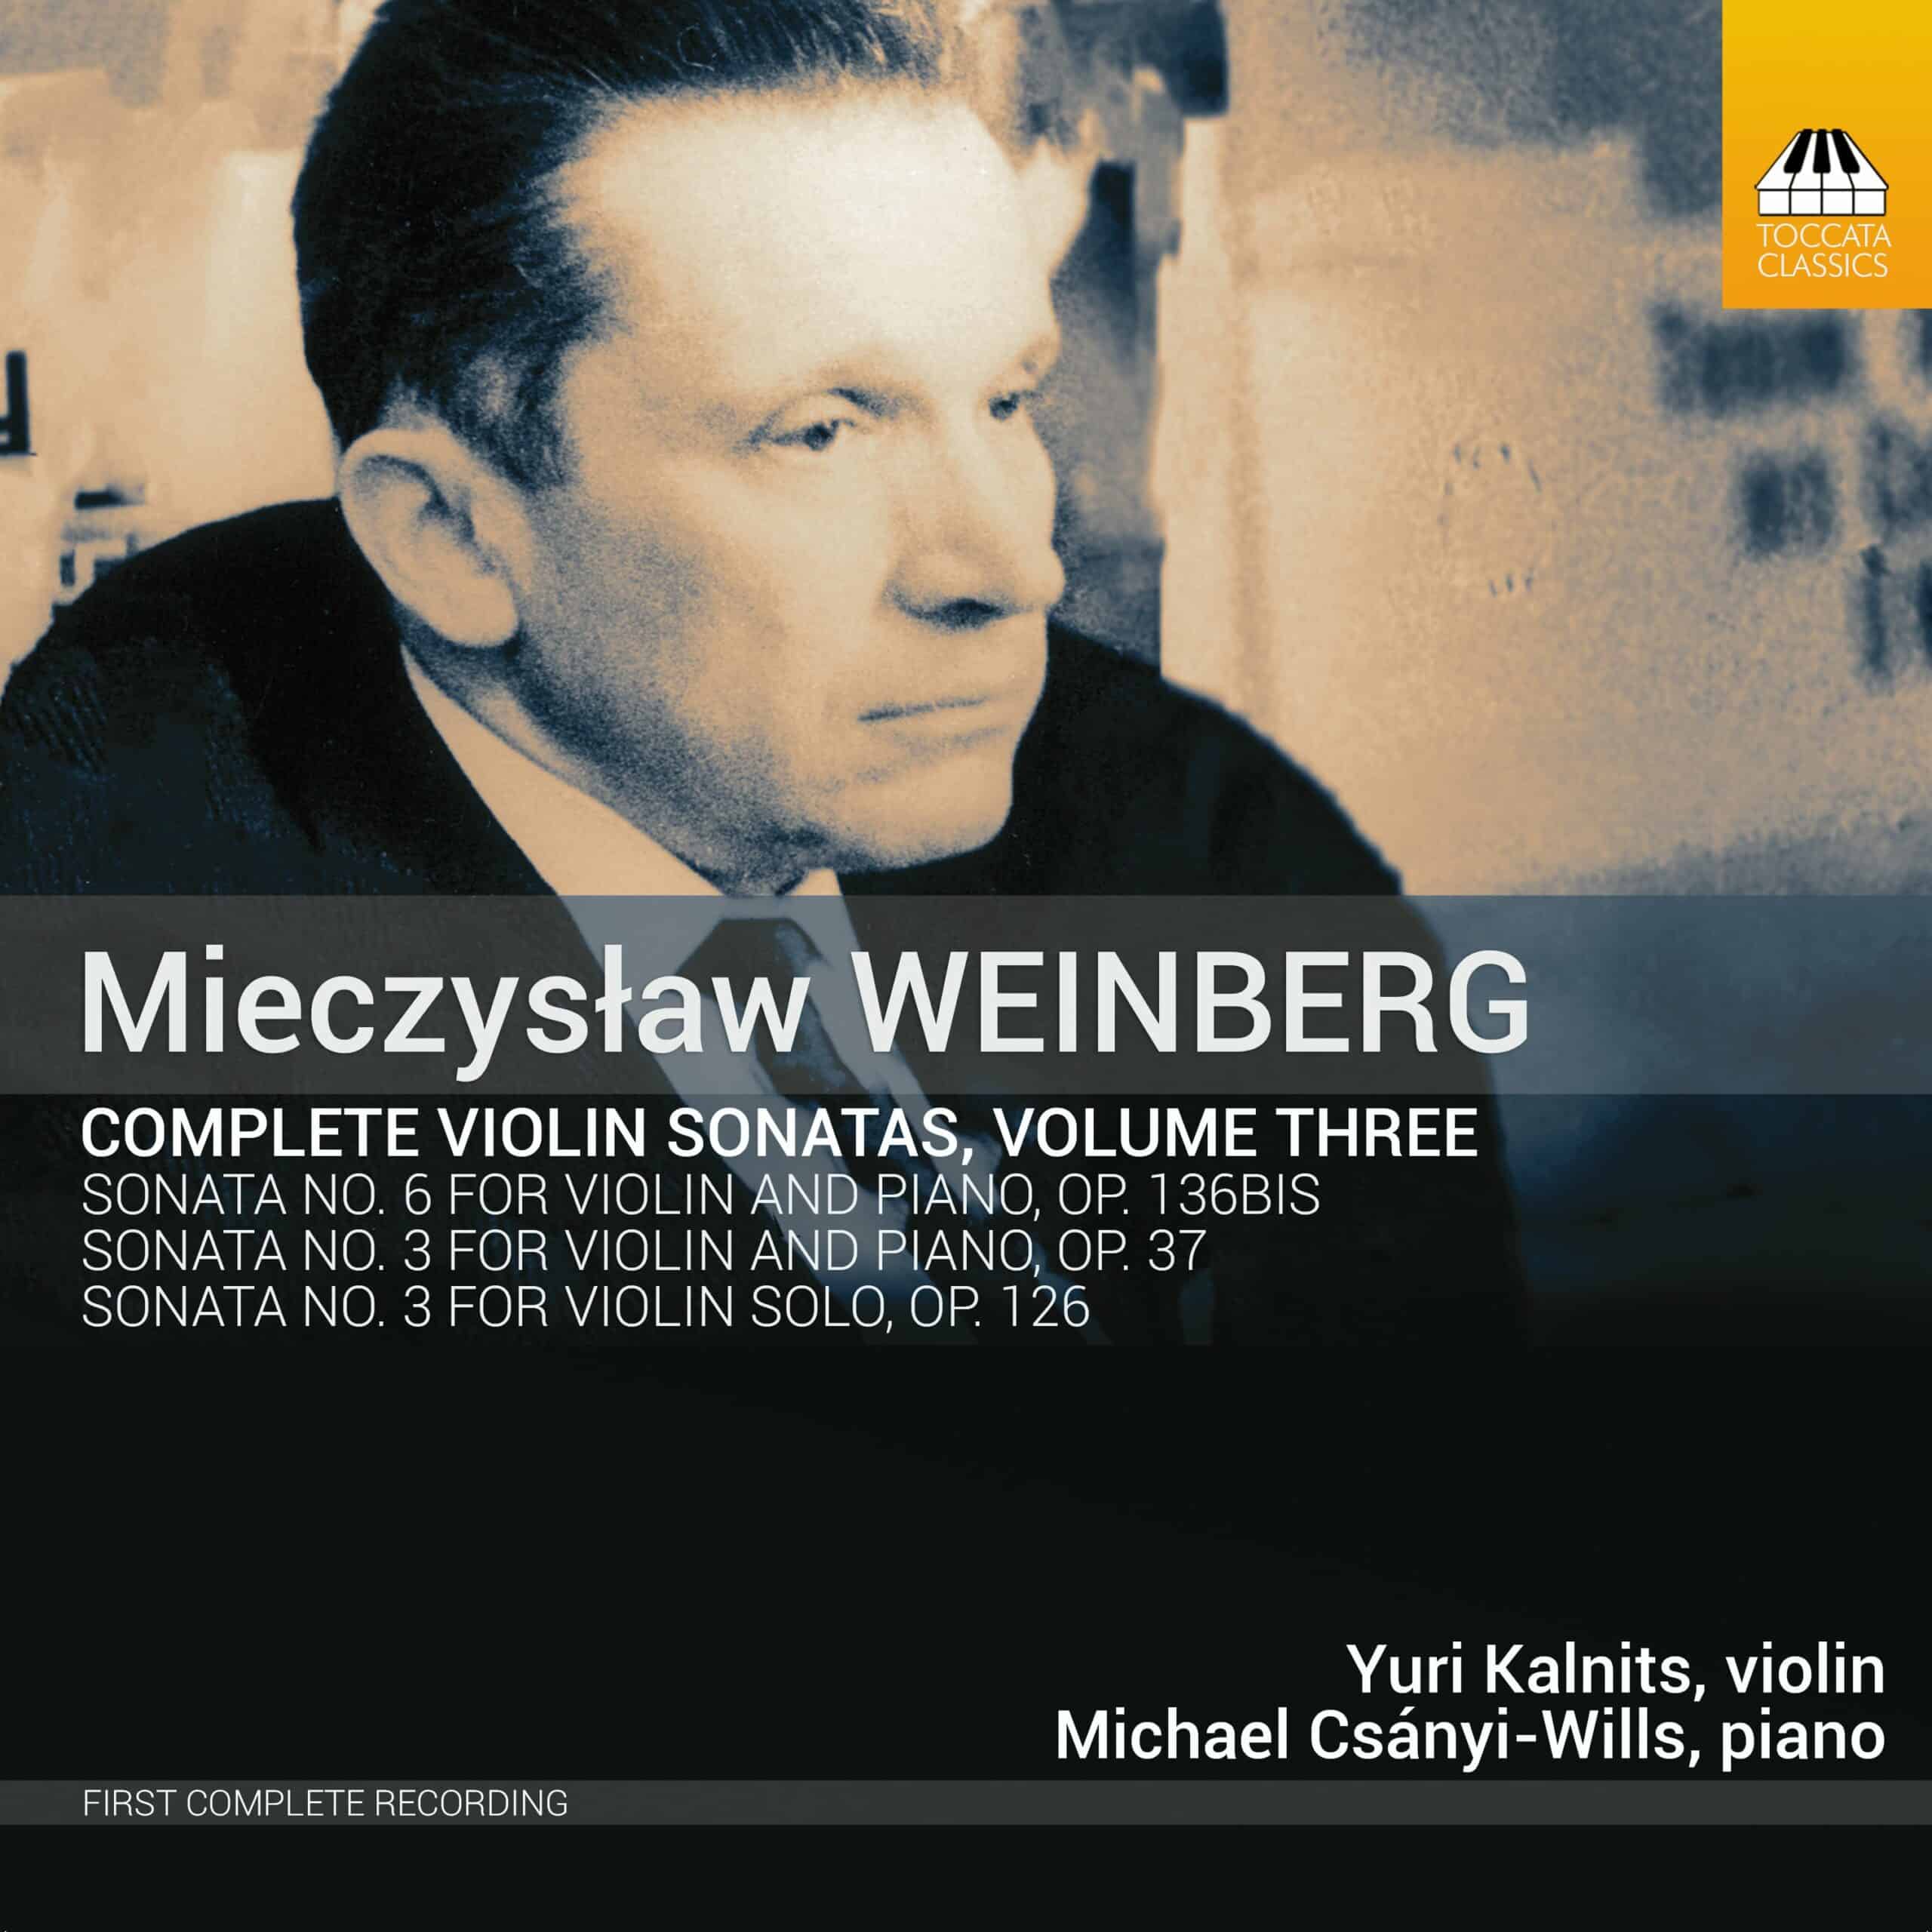 Mieczysław Weinberg: Complete Violin Sonatas, Vol. 3